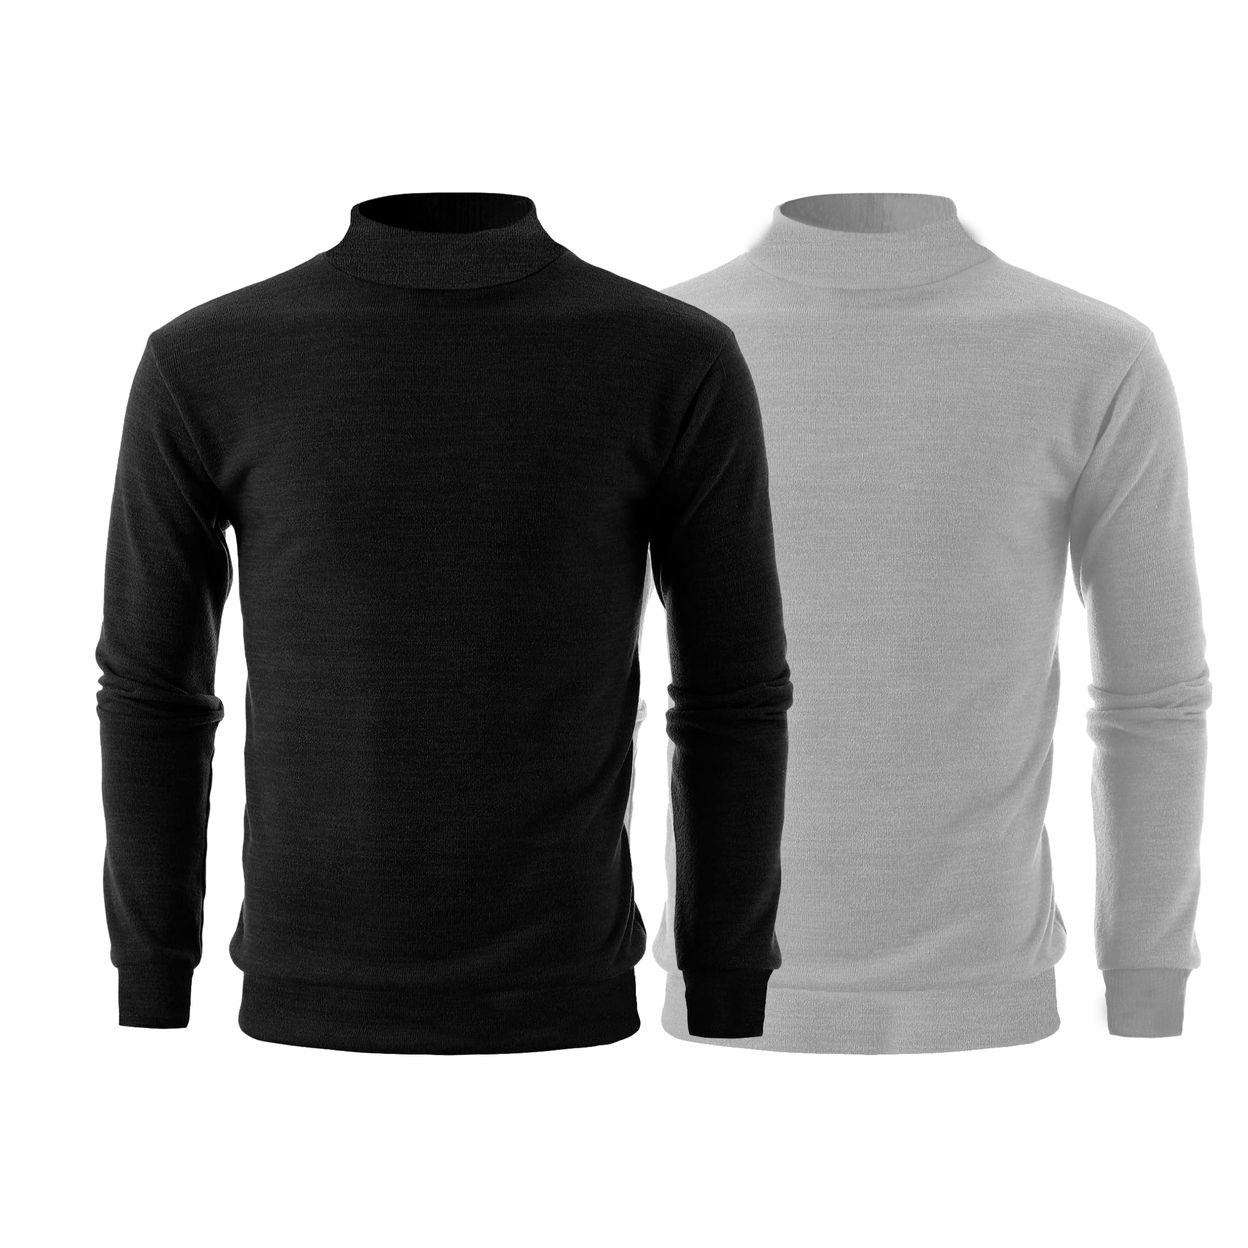 2-Pack: Men's Winter Warm Cozy Knit Slim Fit Mock Neck Sweater - Black & White, Large